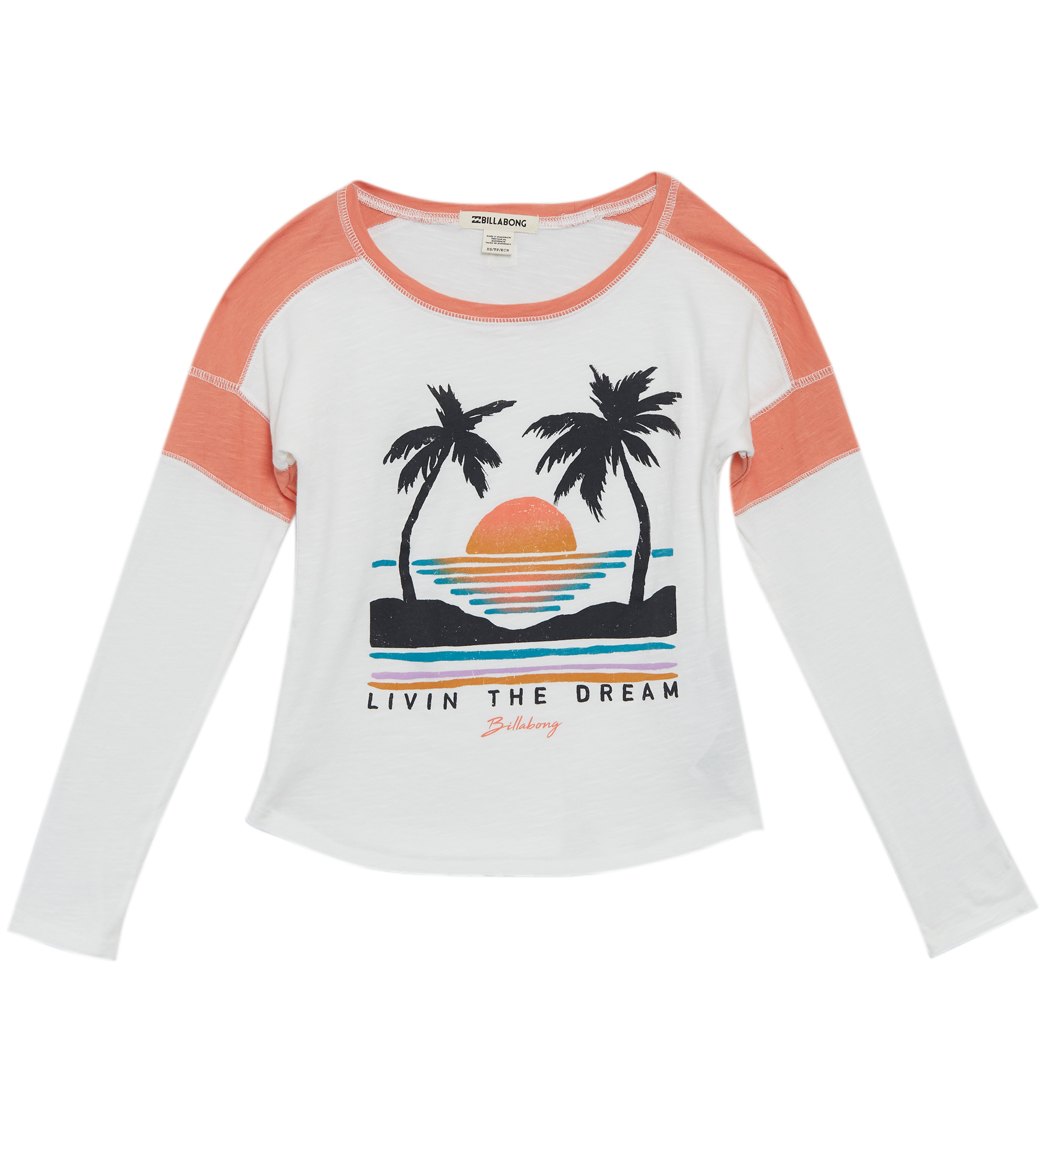 Billabong Girls' Game Time Tee Shirt - Sunset Orange Large Big Cotton - Swimoutlet.com